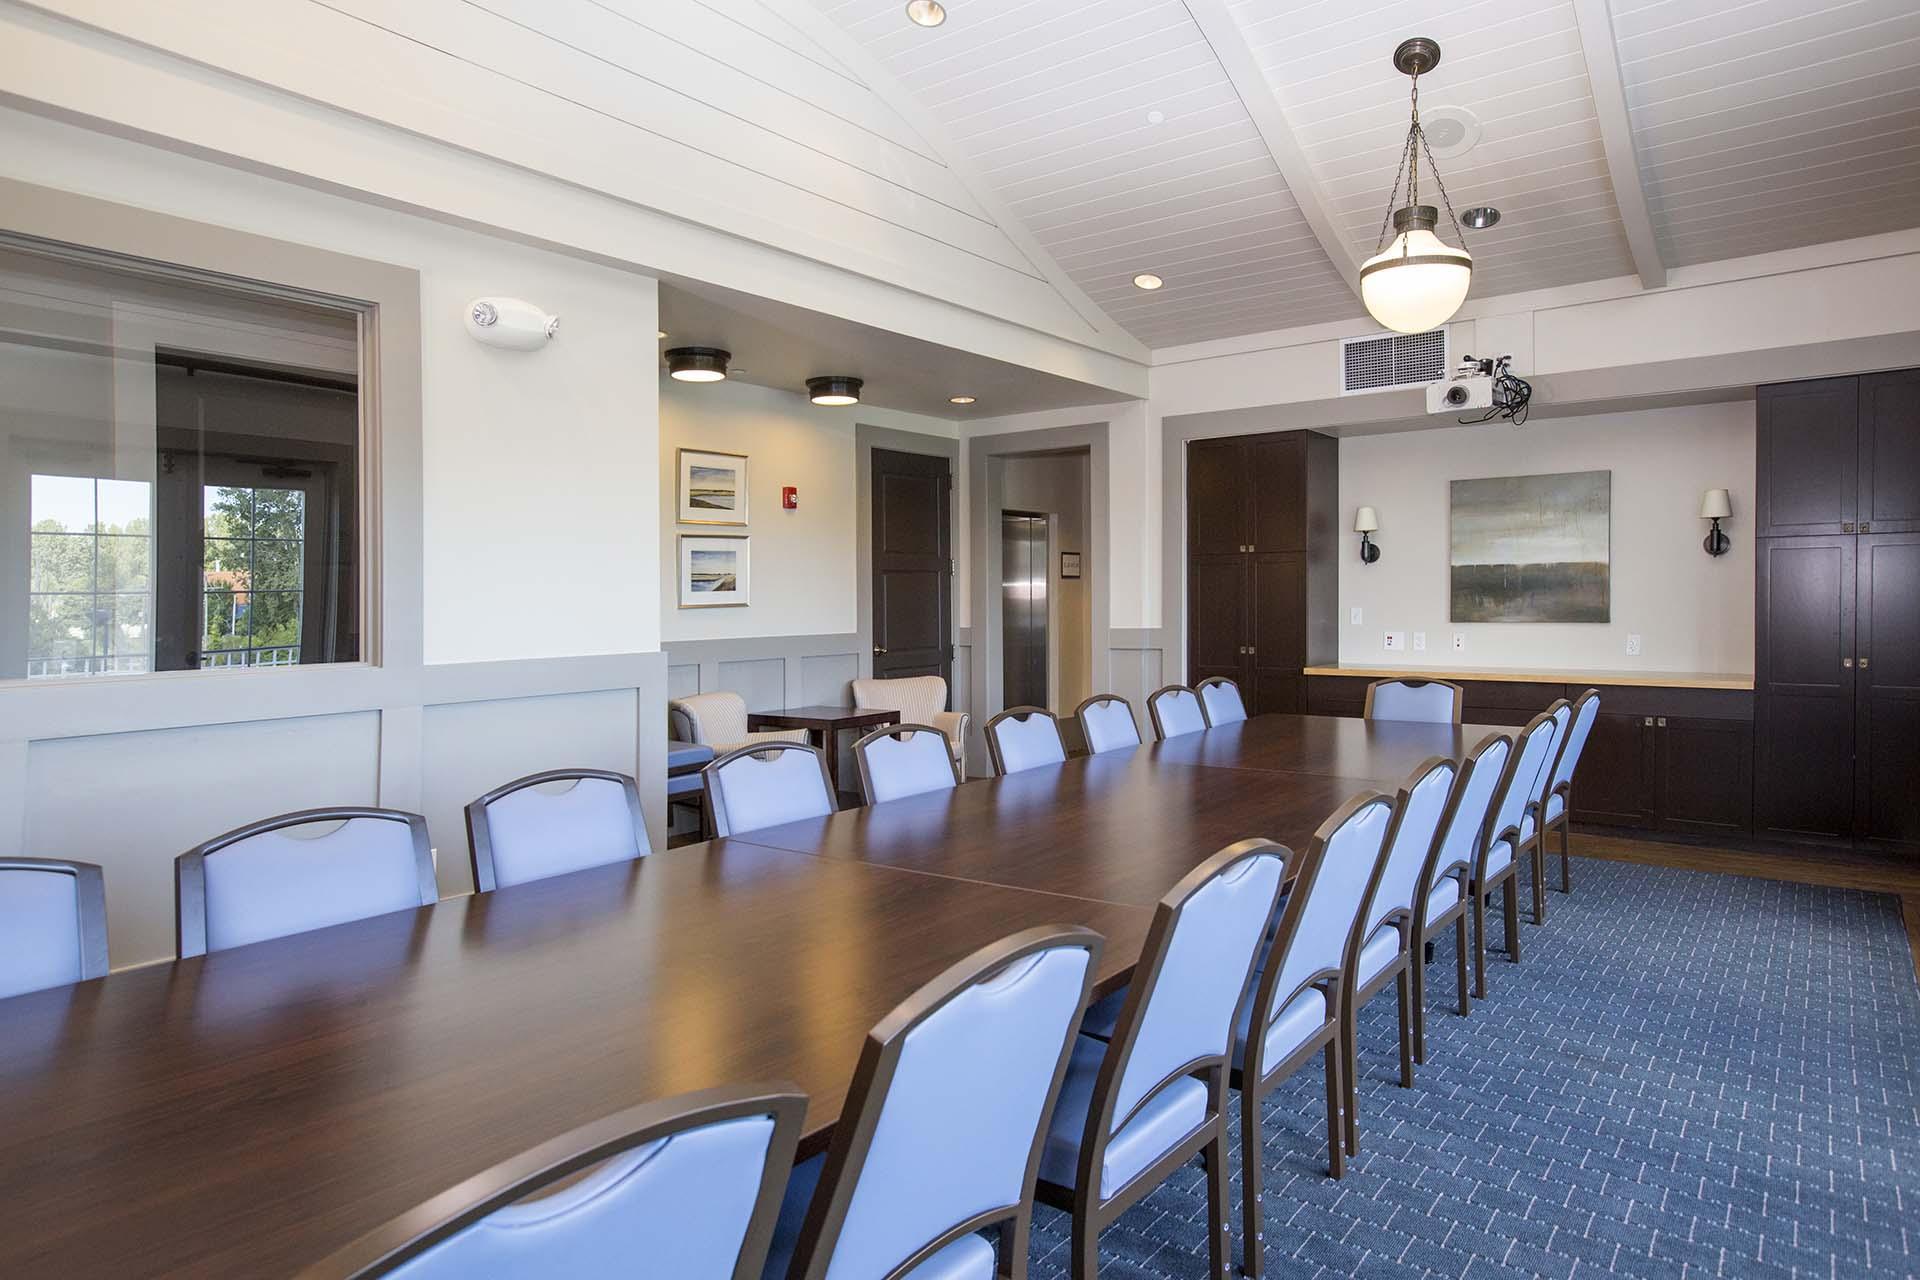 Meeting room at Harbor Shores.